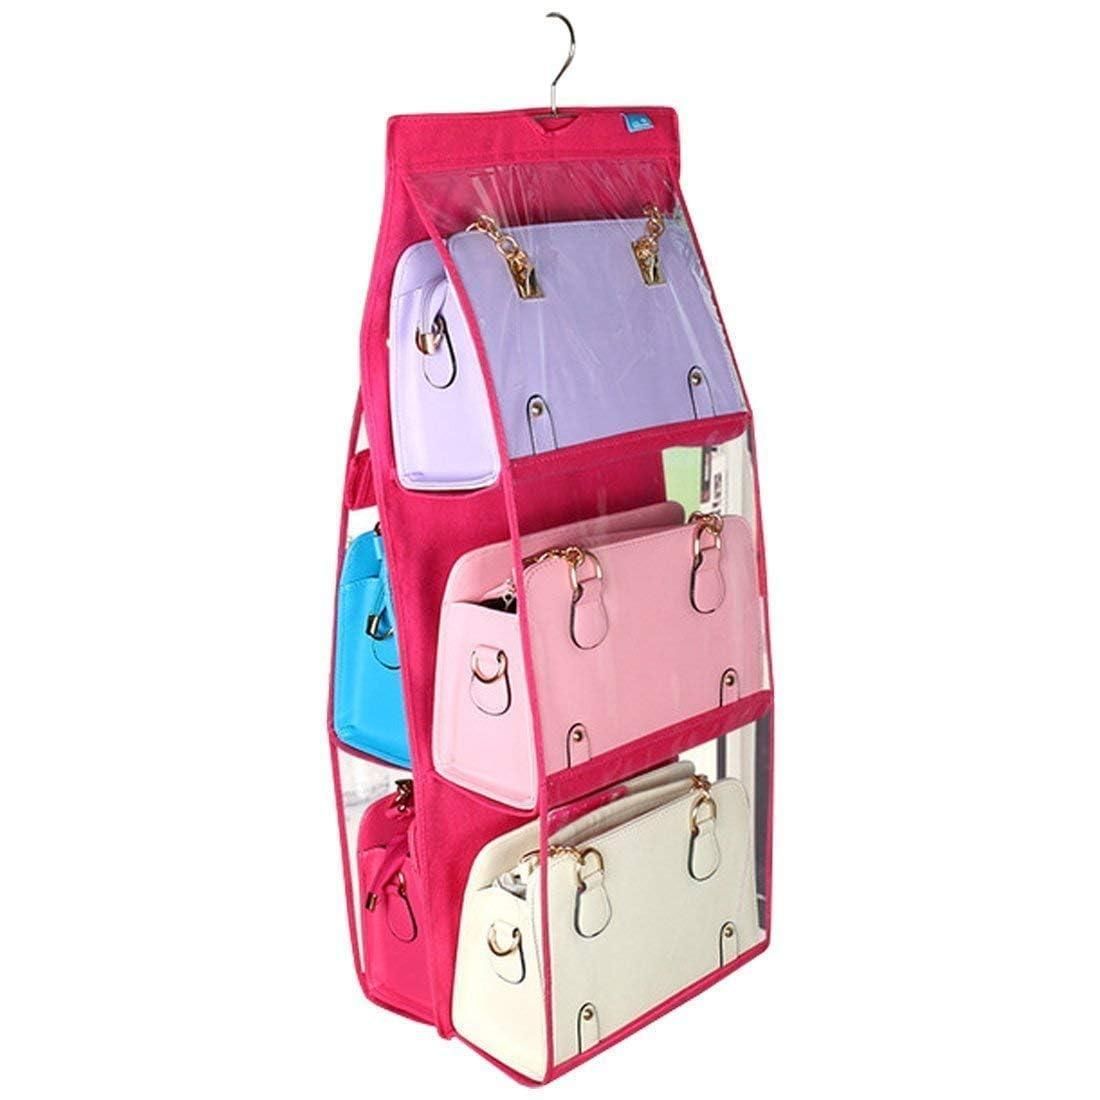 6 Pocket PVC Storage Bag Organizer Hanging Bags Closet Or Ganizer Wardrobe Rack Hangers Holder for Fashion Handbag Purse Pouch